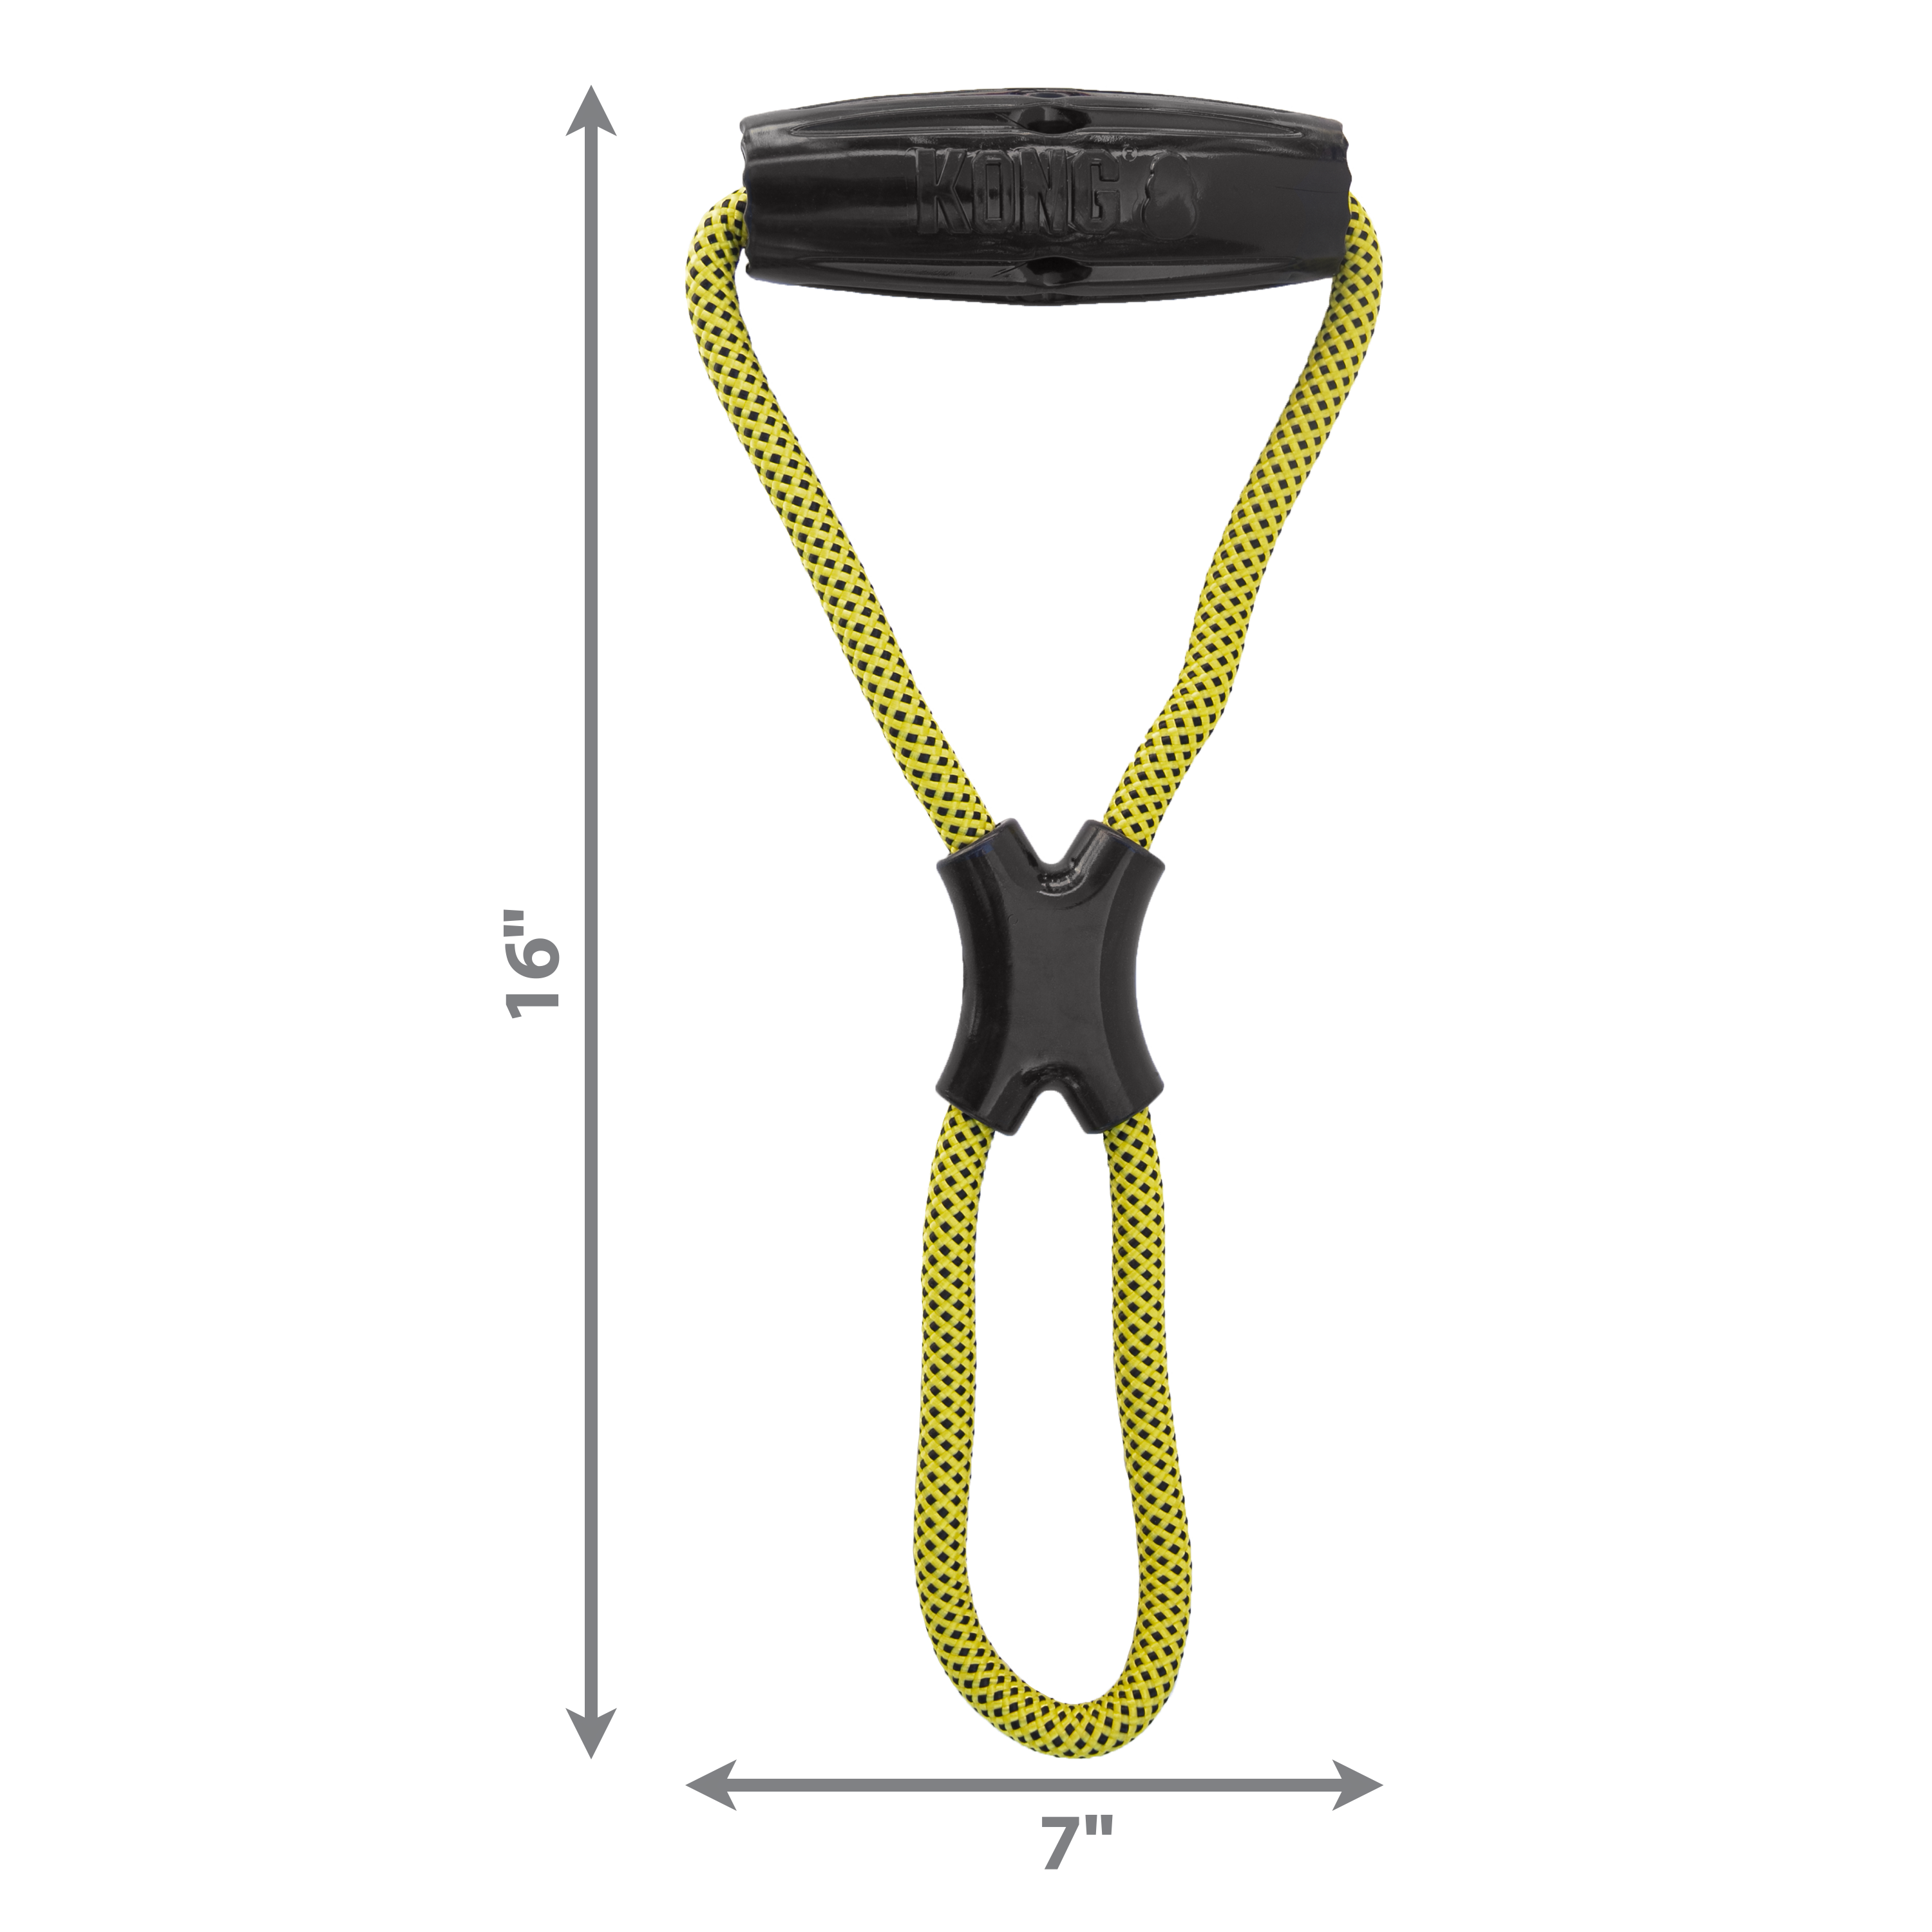 Jaxx Infinity Tug dimoffpack imagen de producto